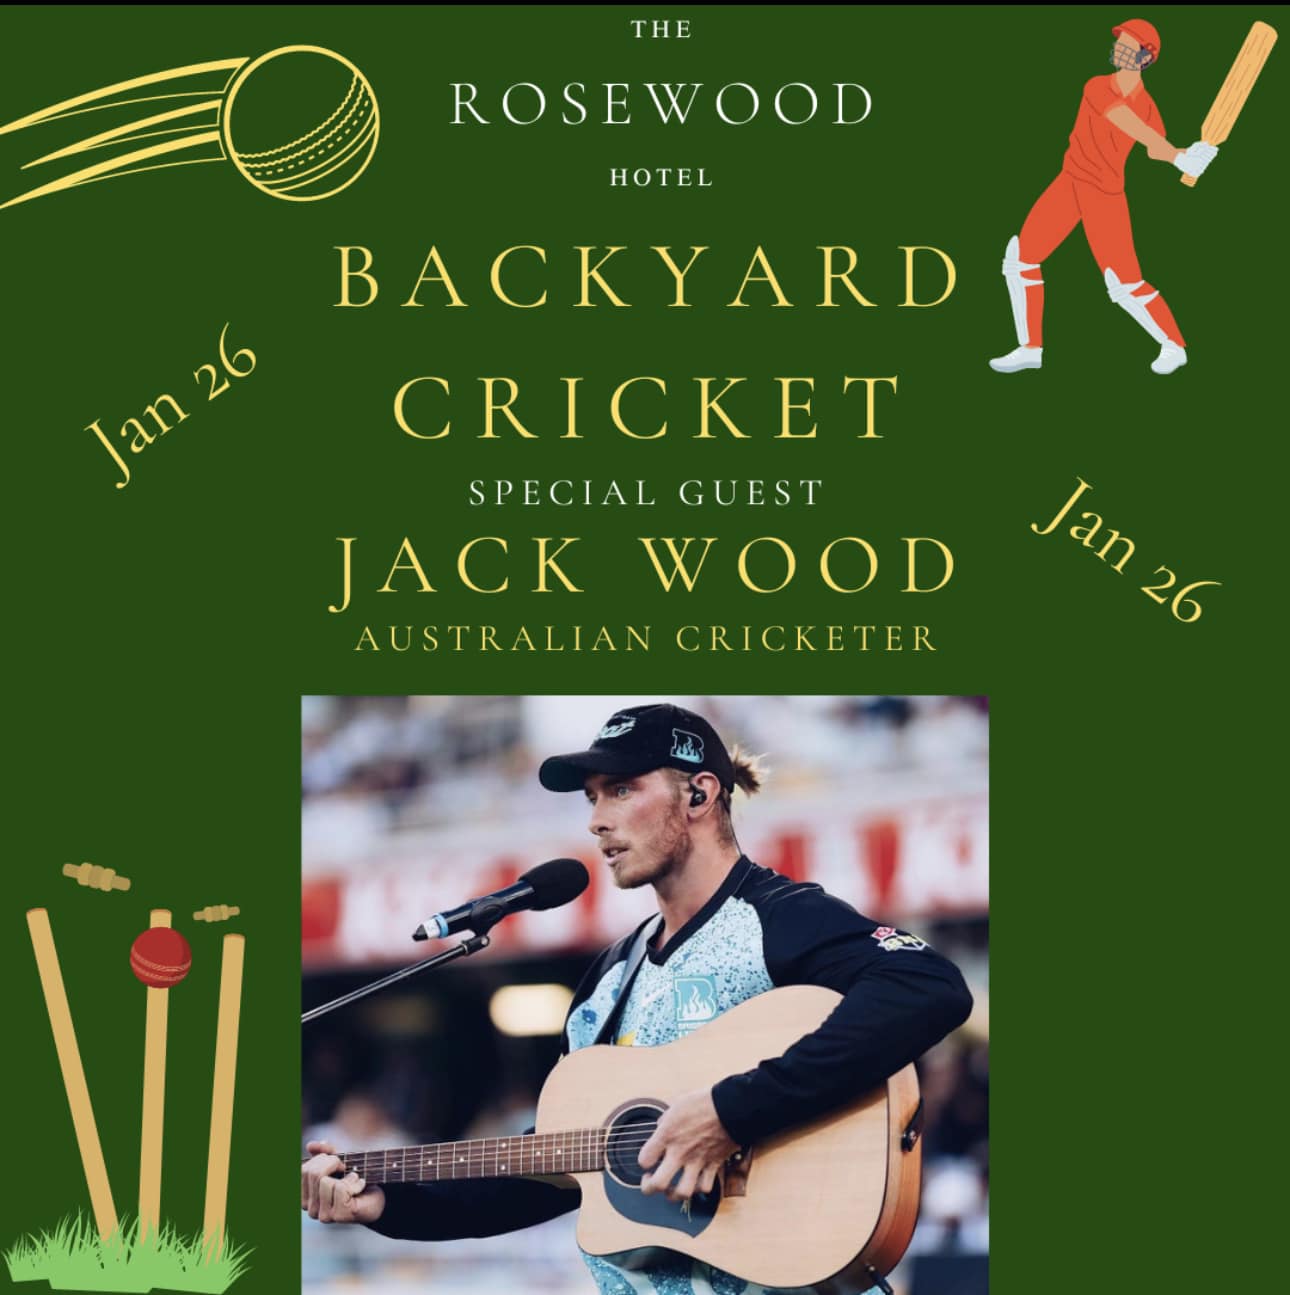 Rosewood Hotel backyard cricket